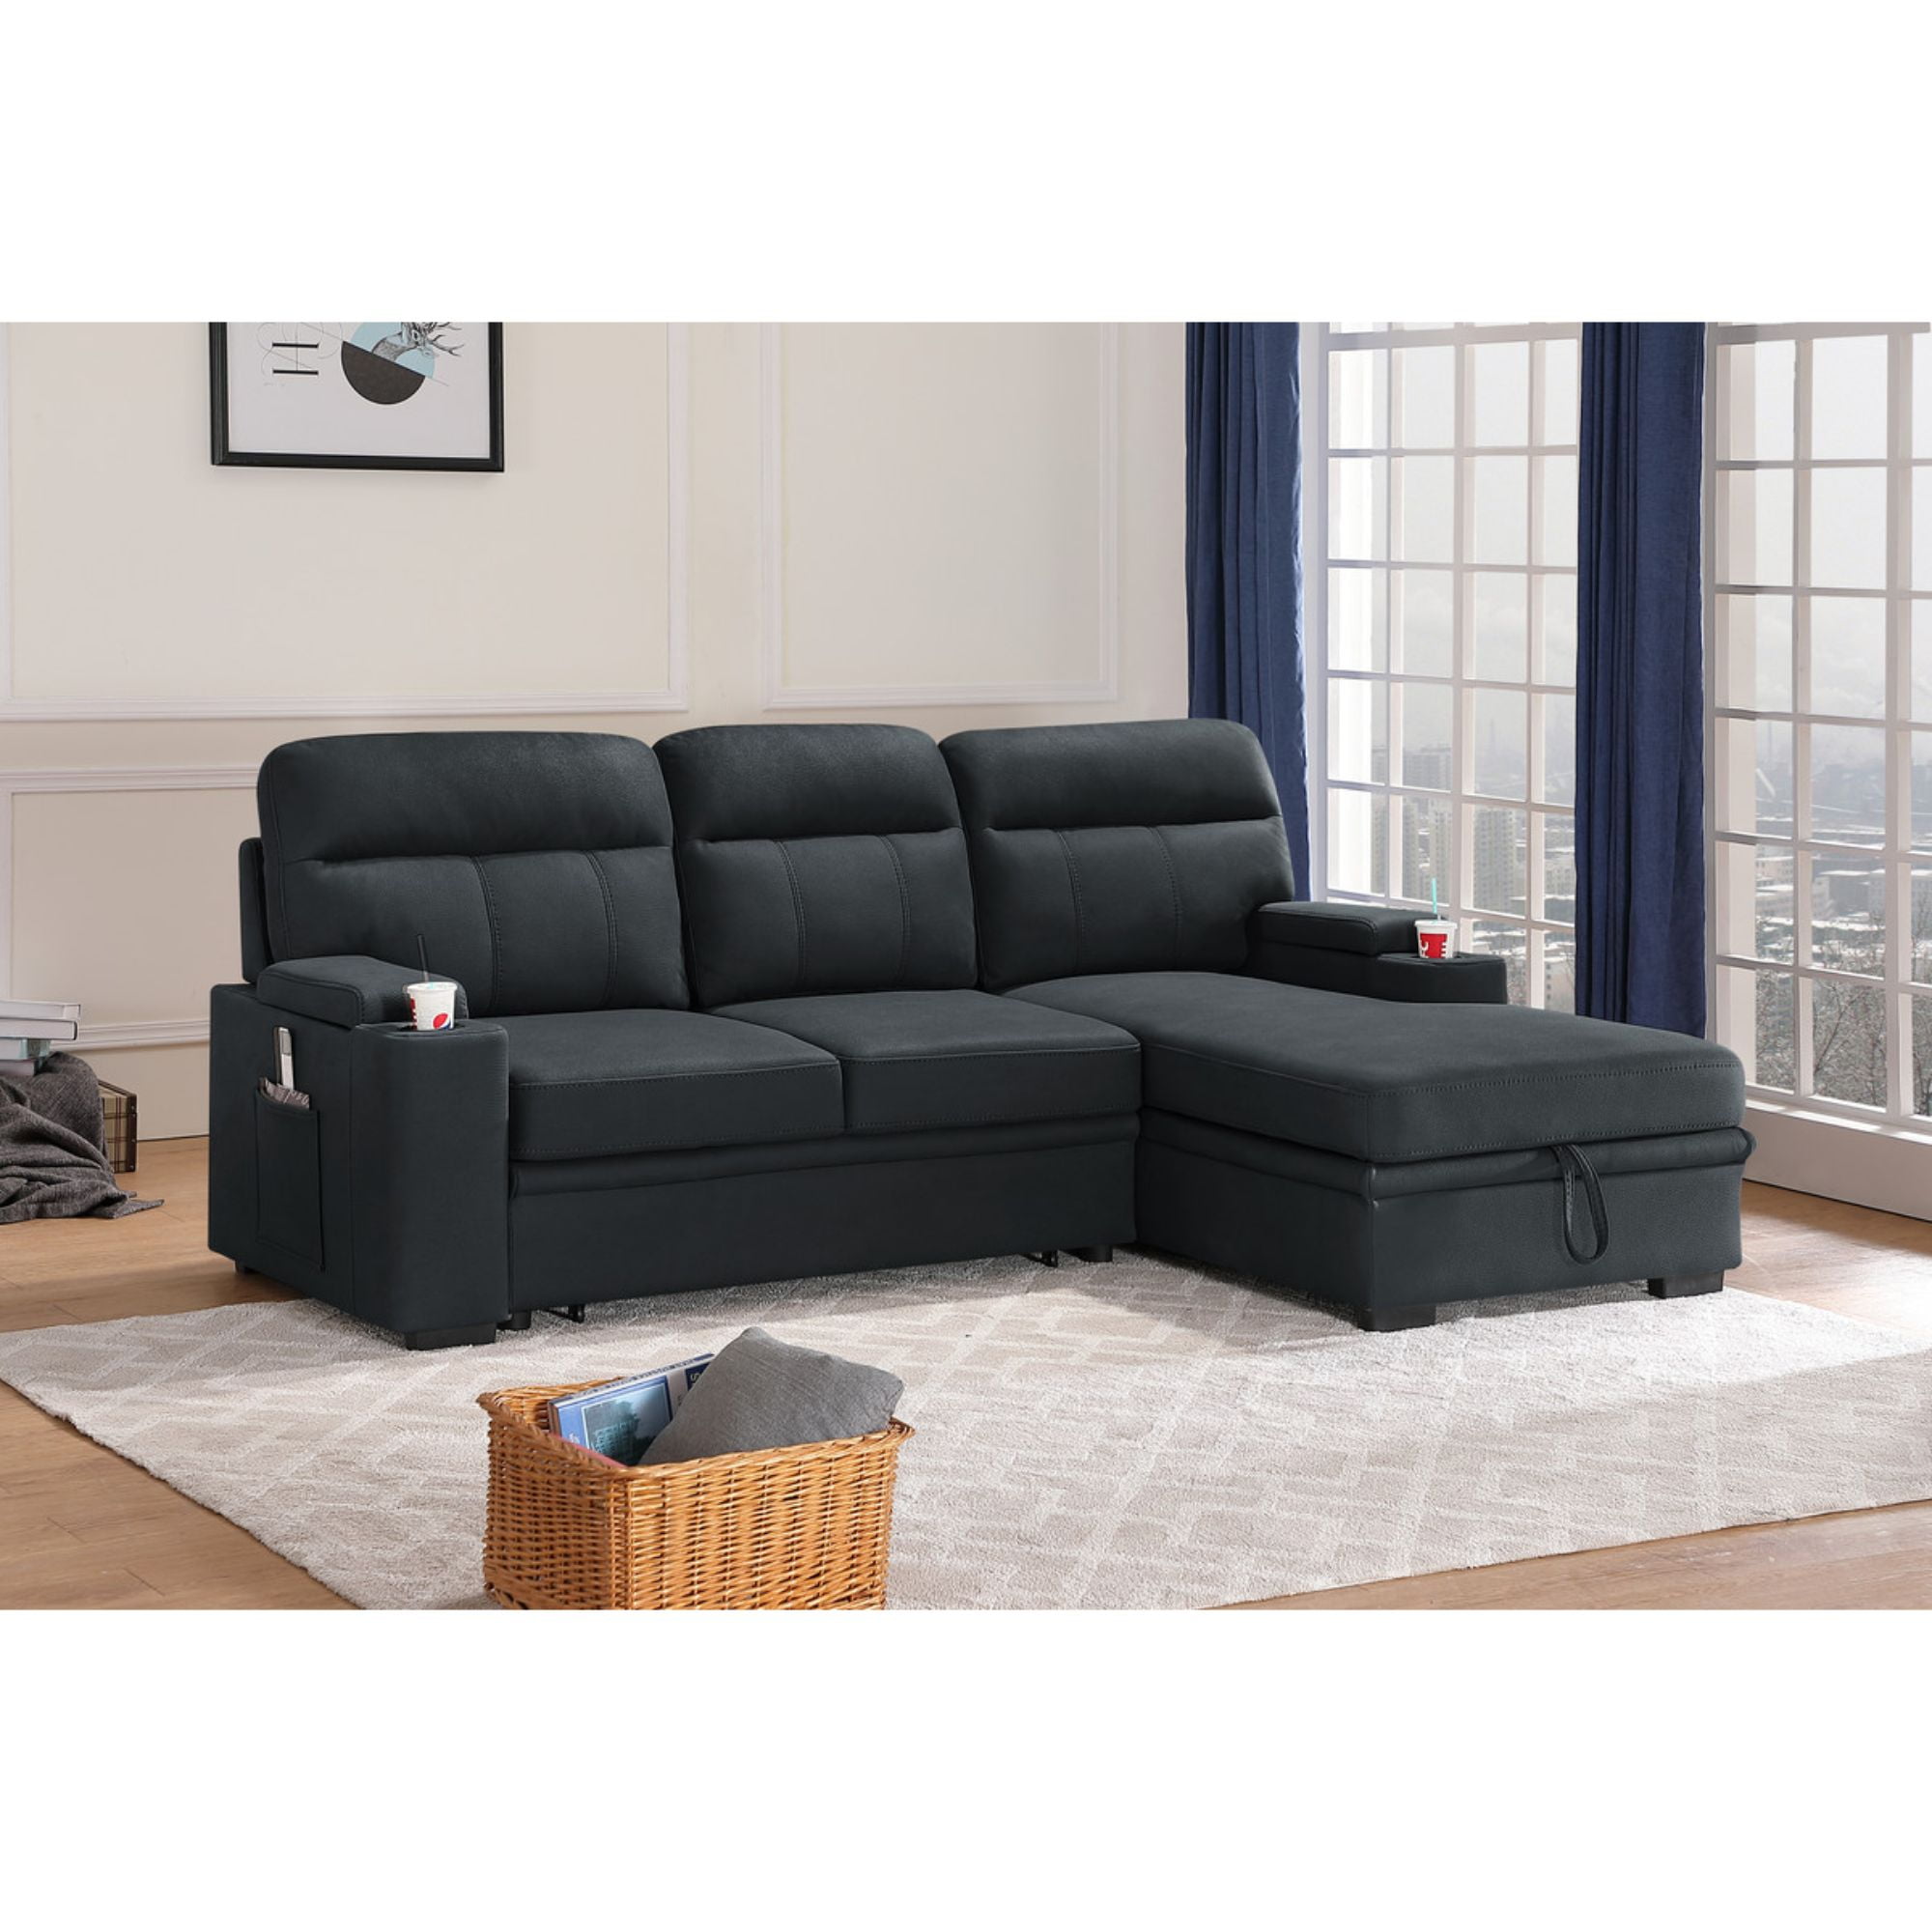 94 Kaden Gray Fabric Sleeper Sectional, Kaden Fabric Sleeper Sectional Sofa With Storage Chaise And Arms